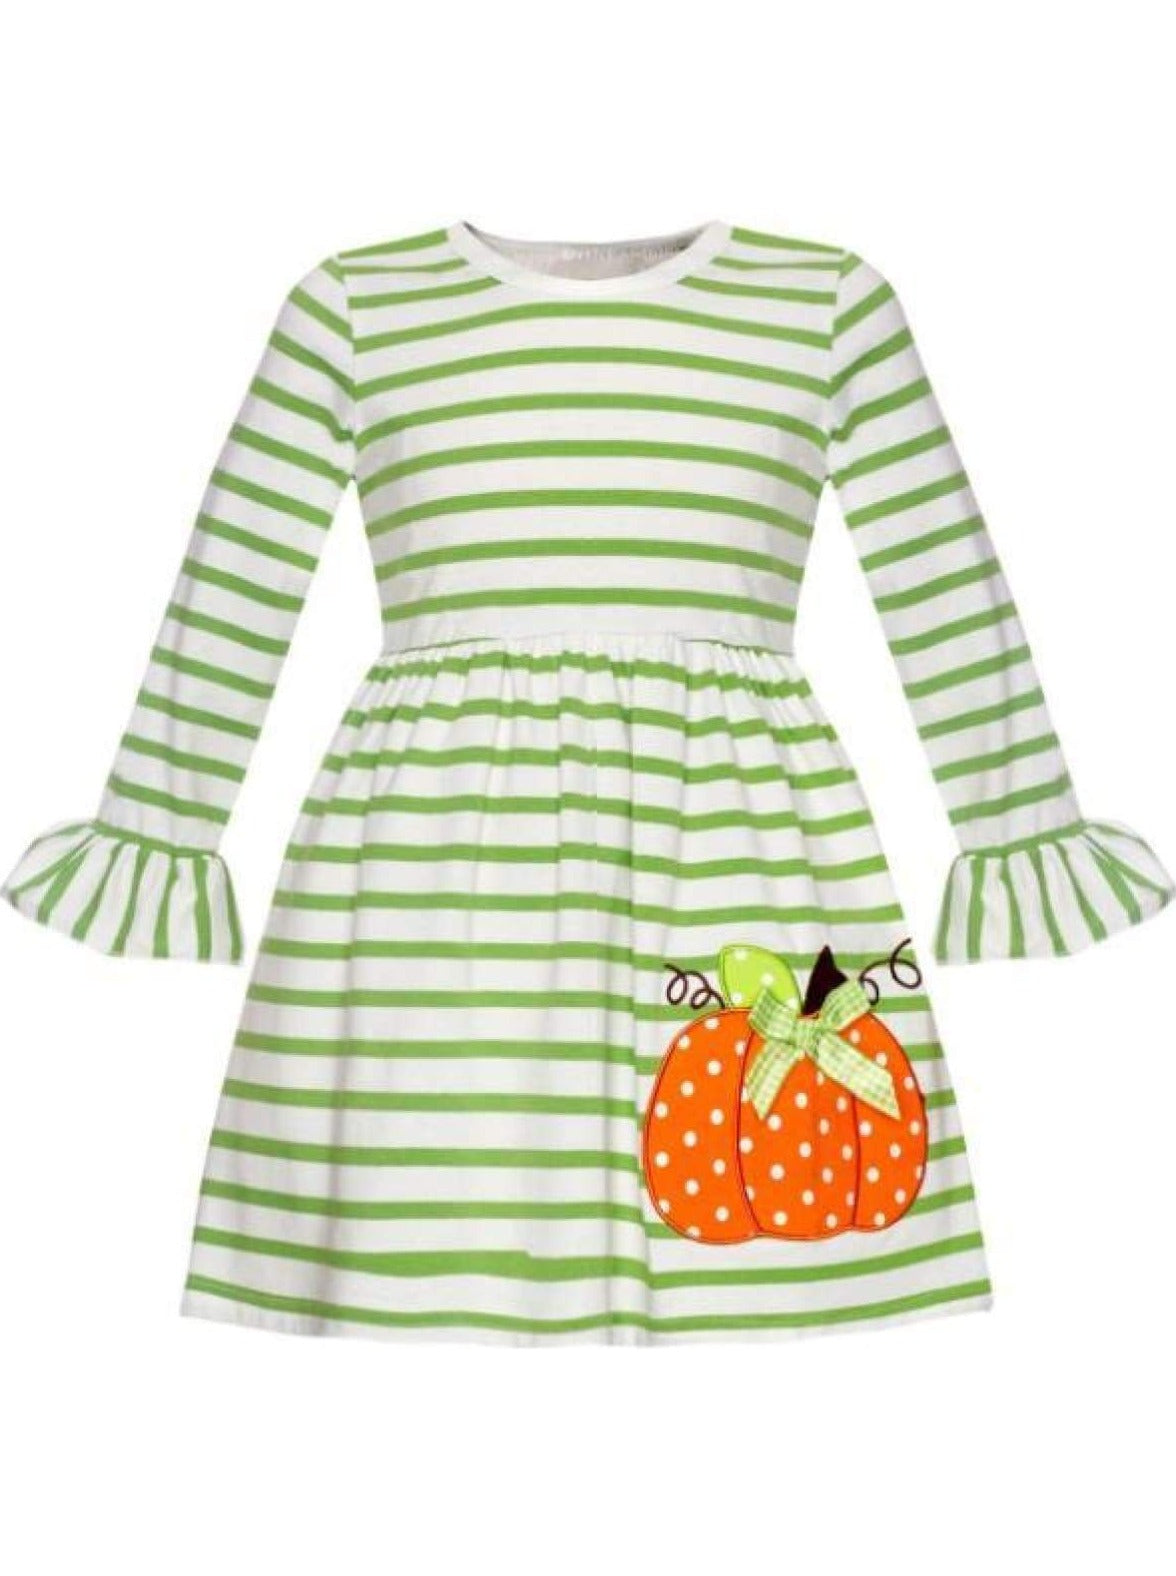 Little girls Fall long-sleeve striped A-line dress with ruffle cuffs and polka dot pumpkin applique on skirt - Mia Belle Girls